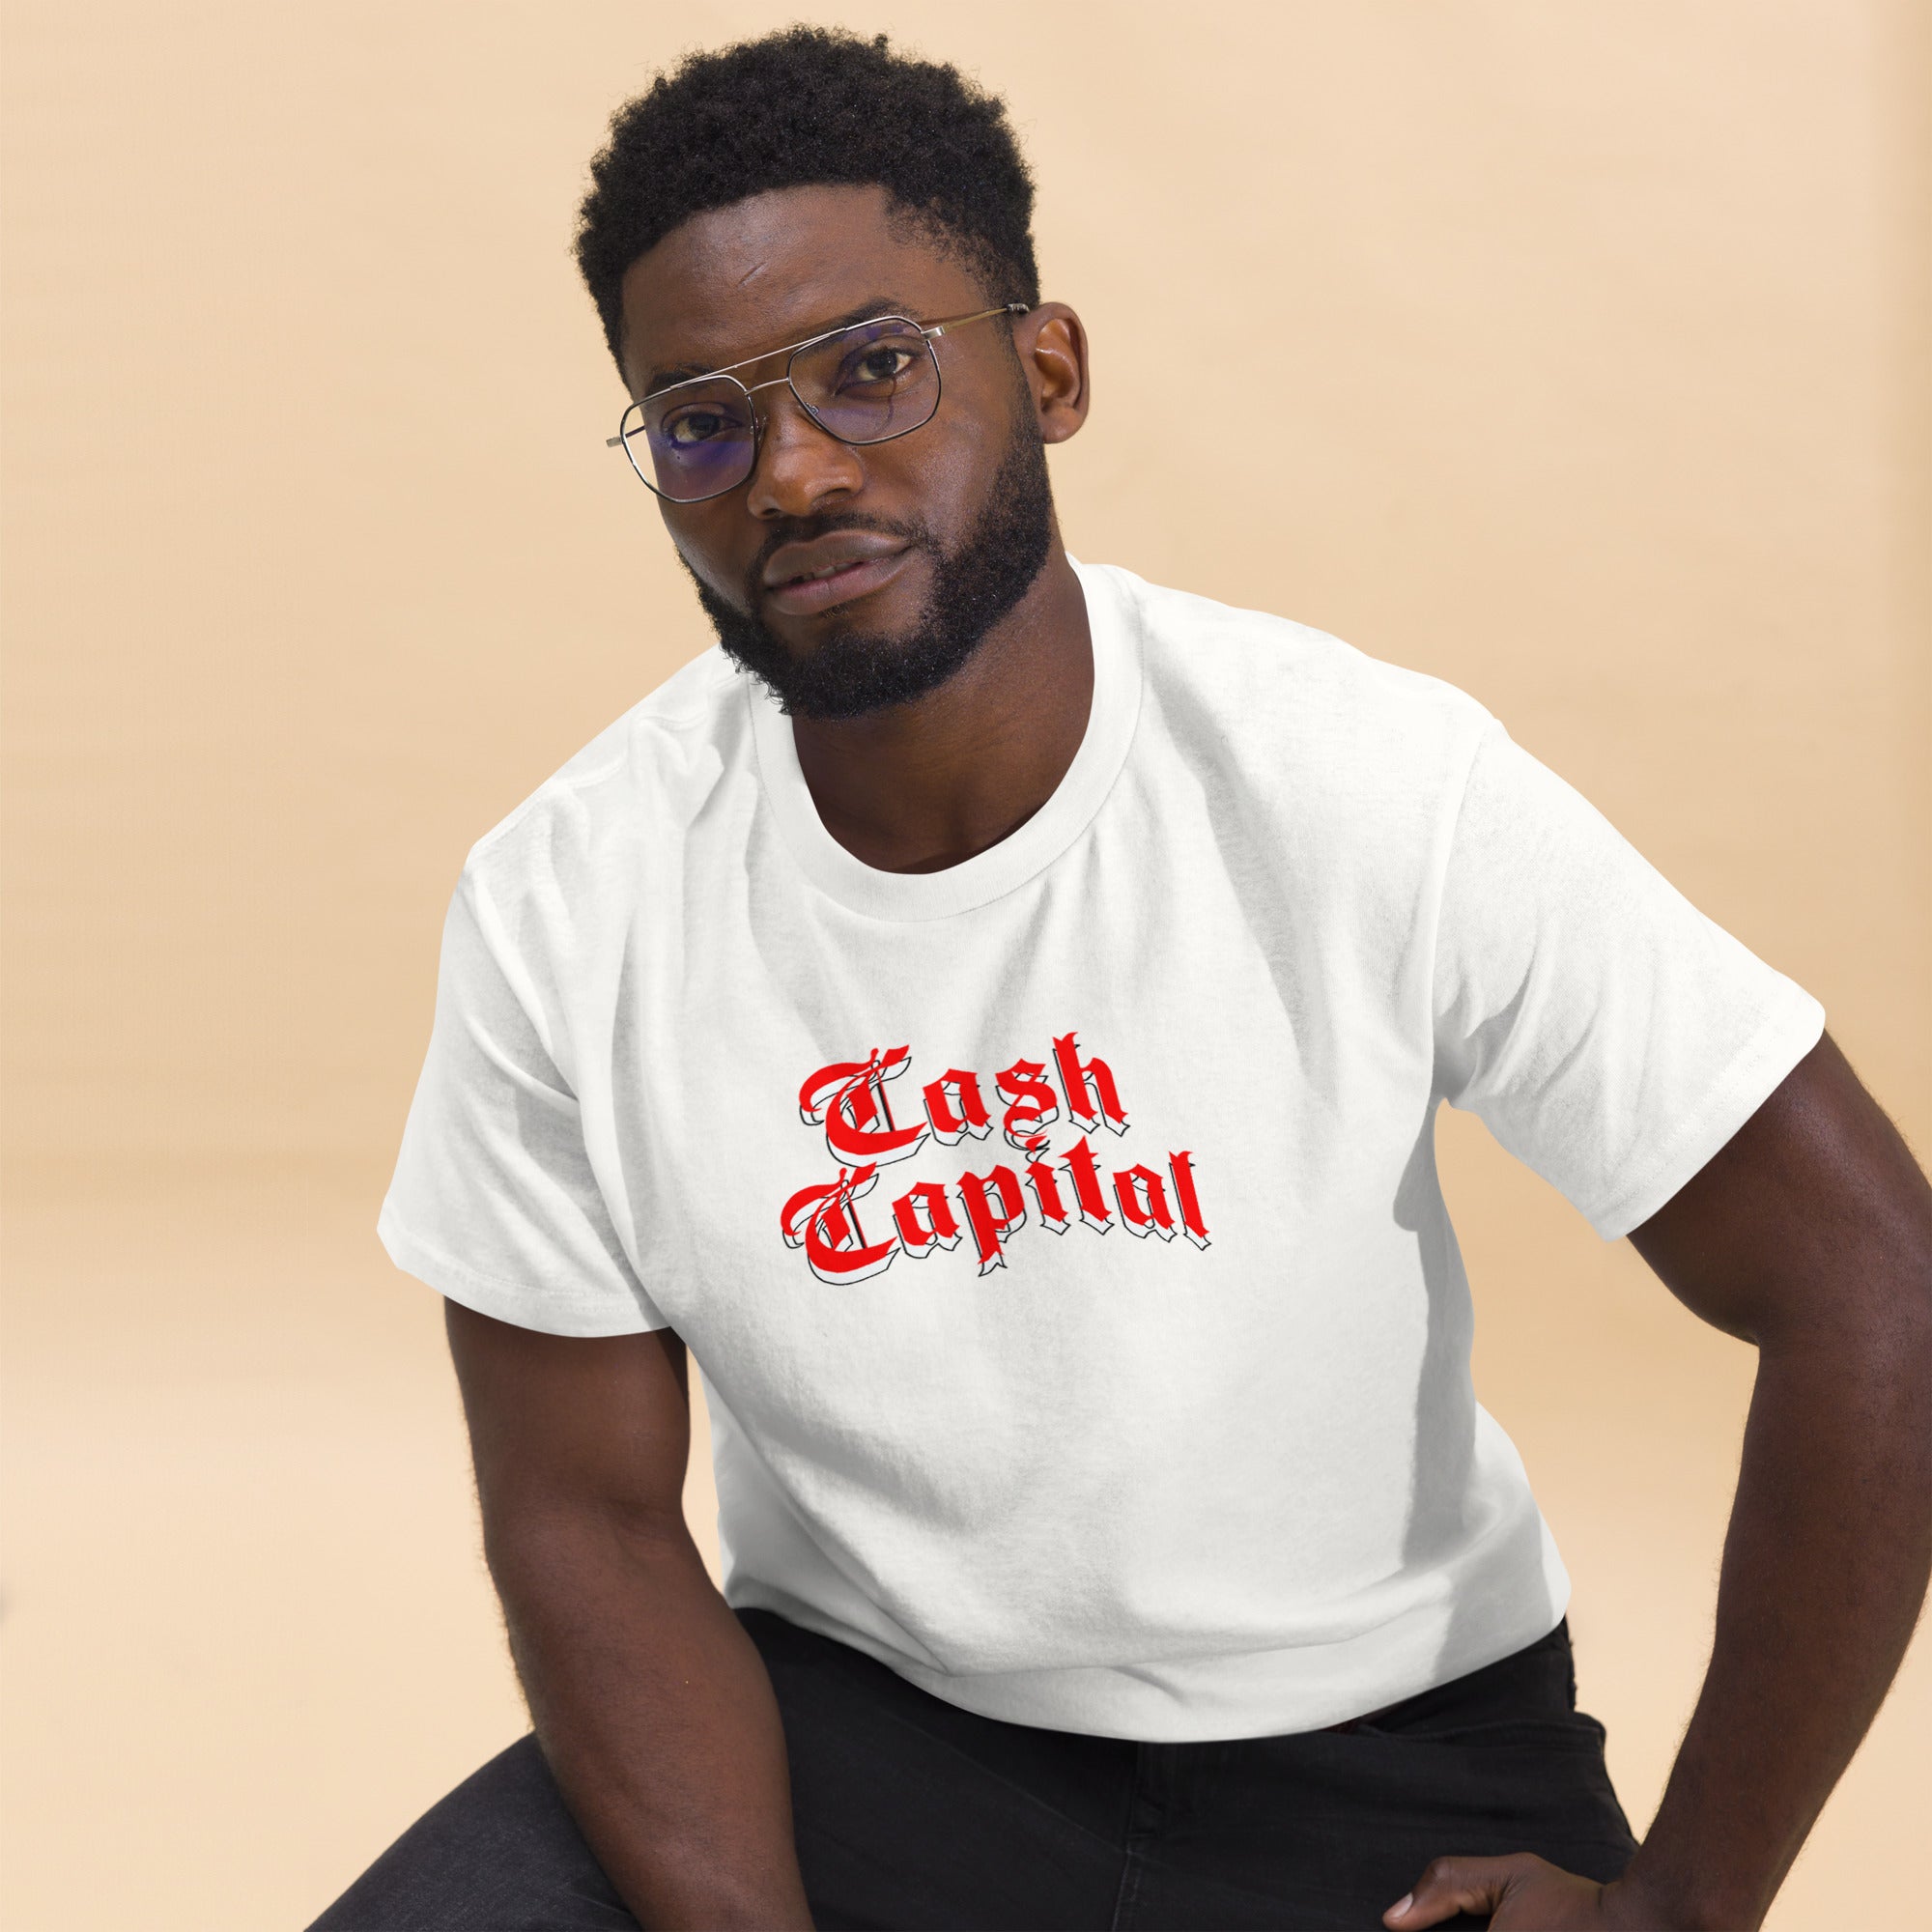 Cash Capital T-Shirt